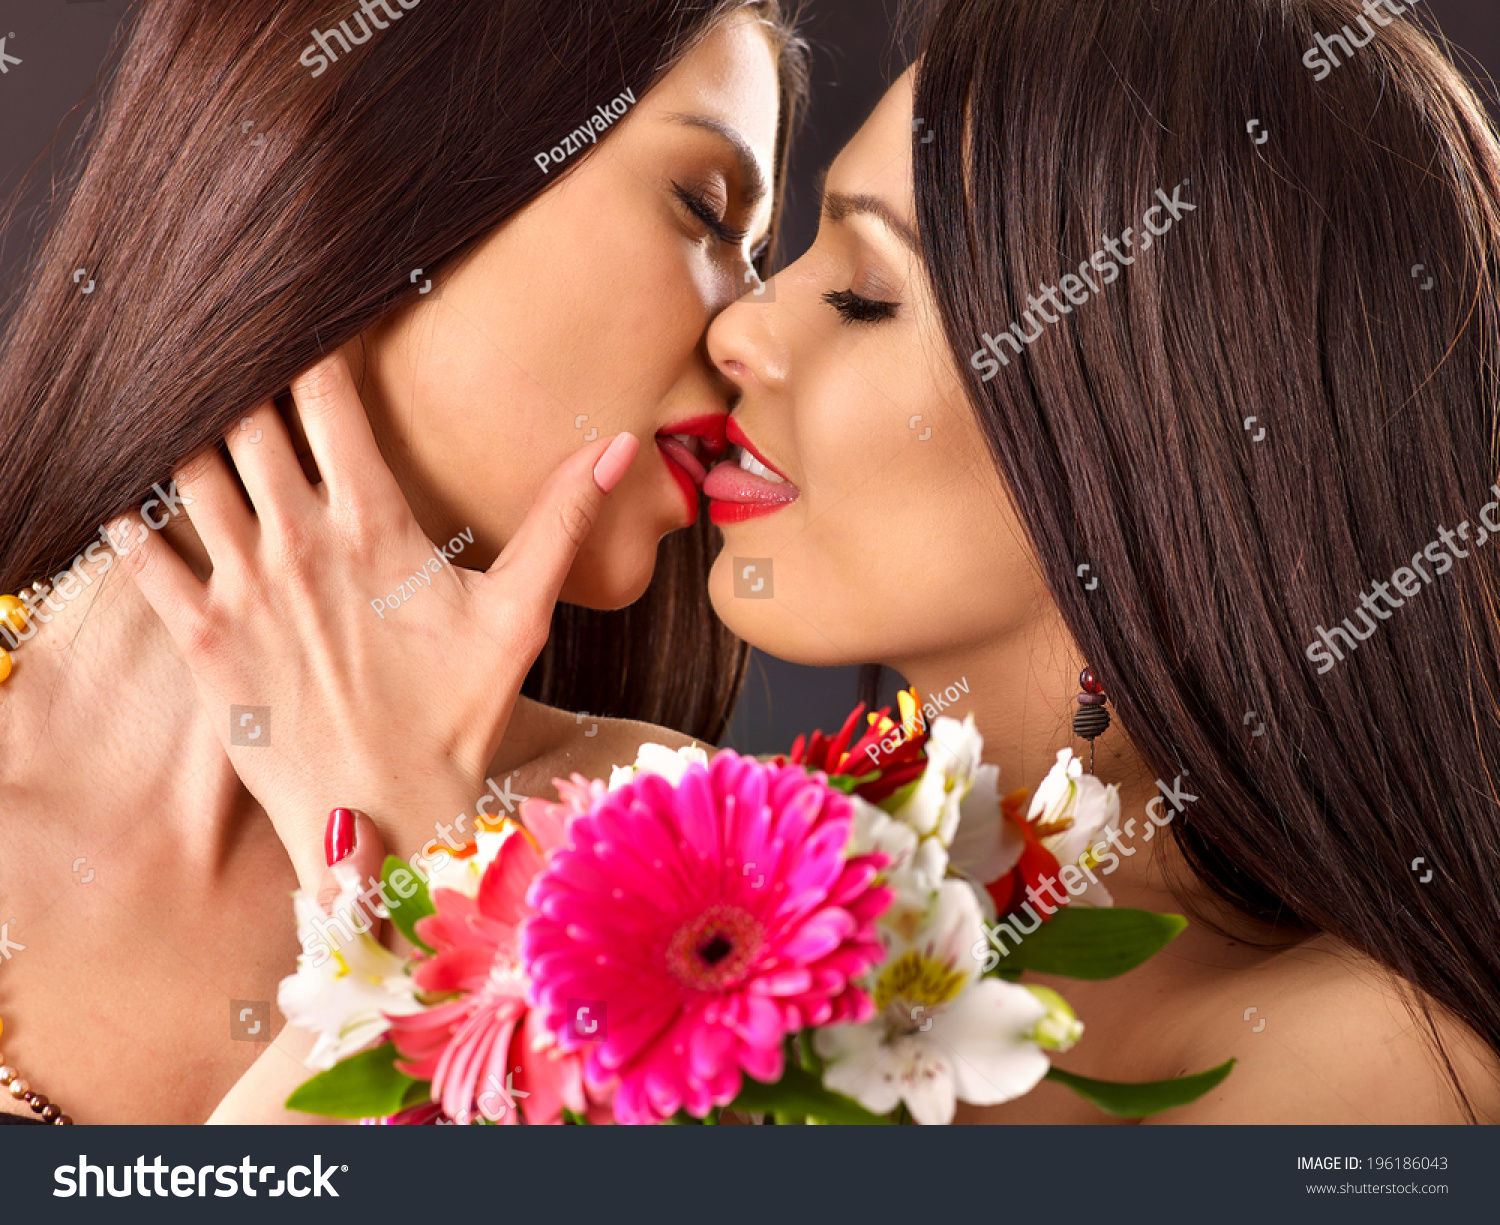 ayaan hashmi recommends women kissing pics pic